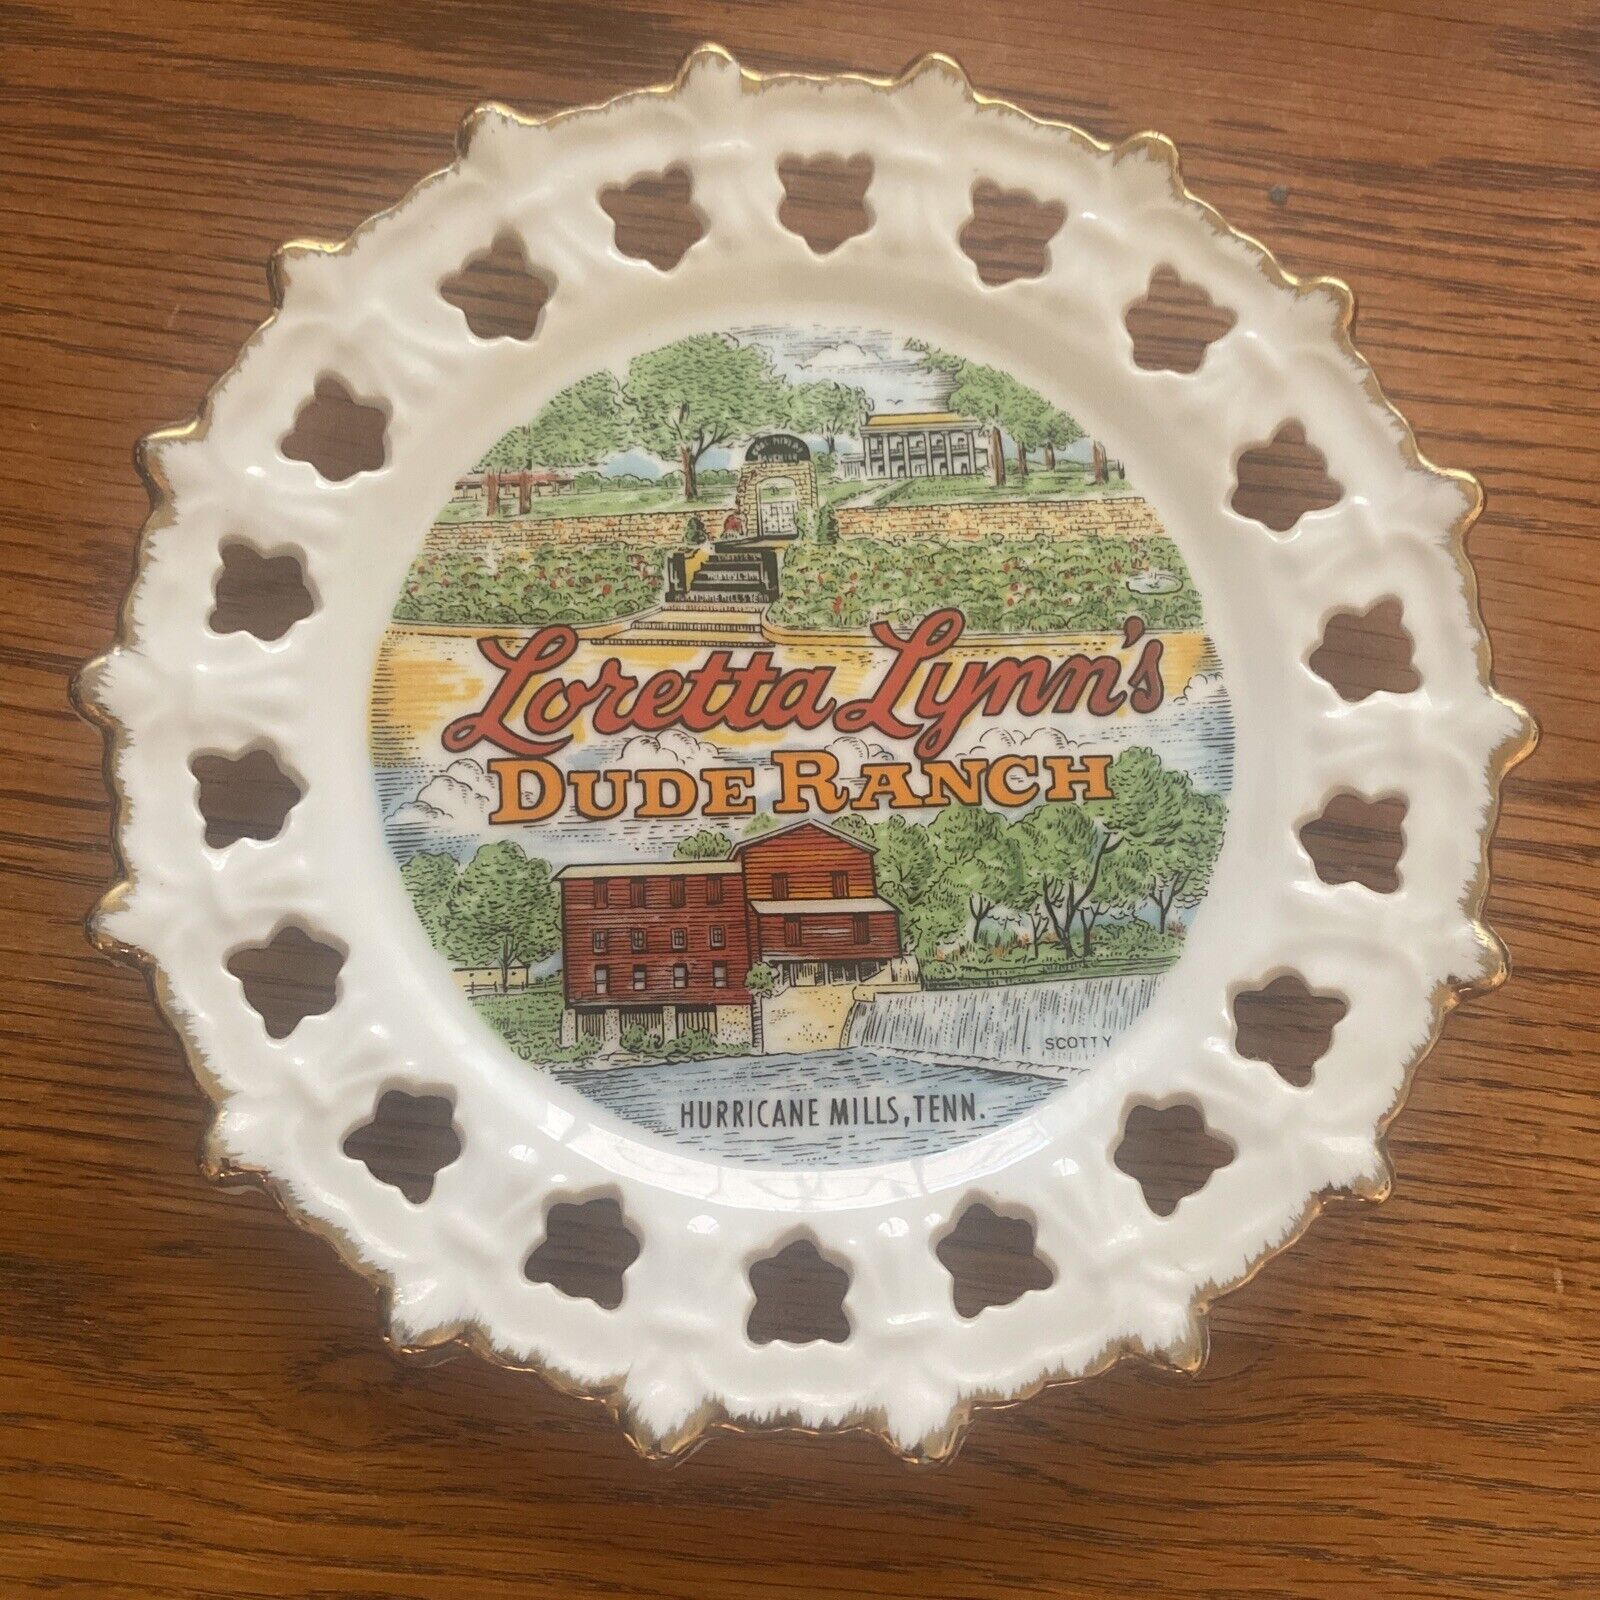 Loretta Lynn Dude Ranch Souvenir Plate Decor Plate. Vintage Loretta Lynn Fan